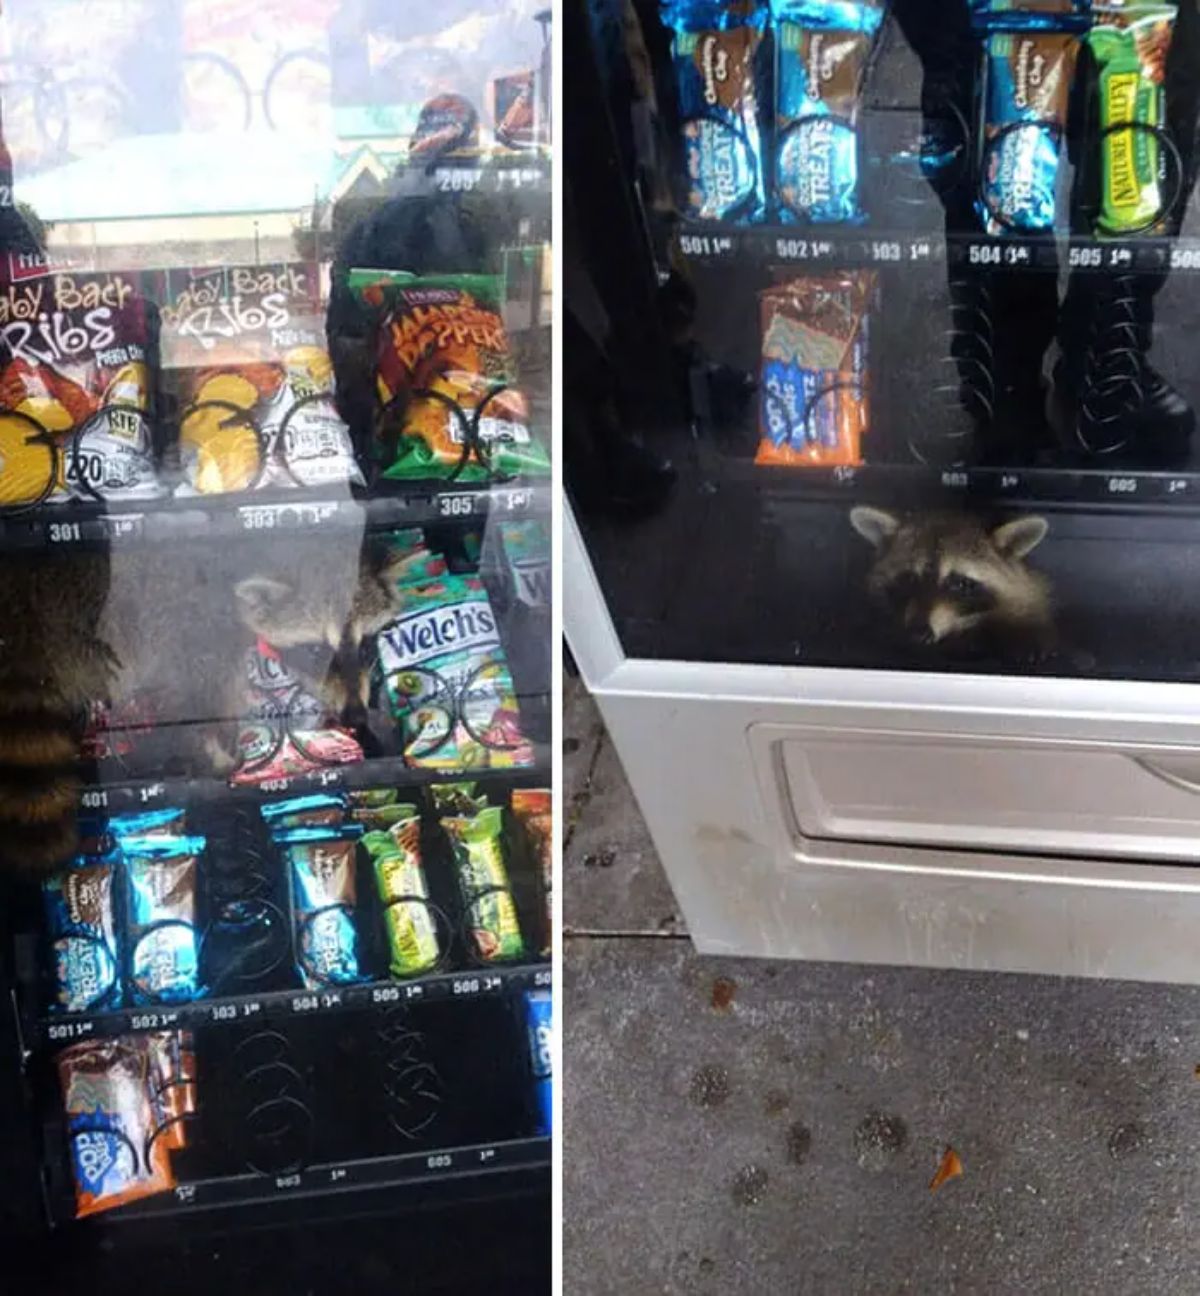 2 photos of a raccoon inside a vending machine